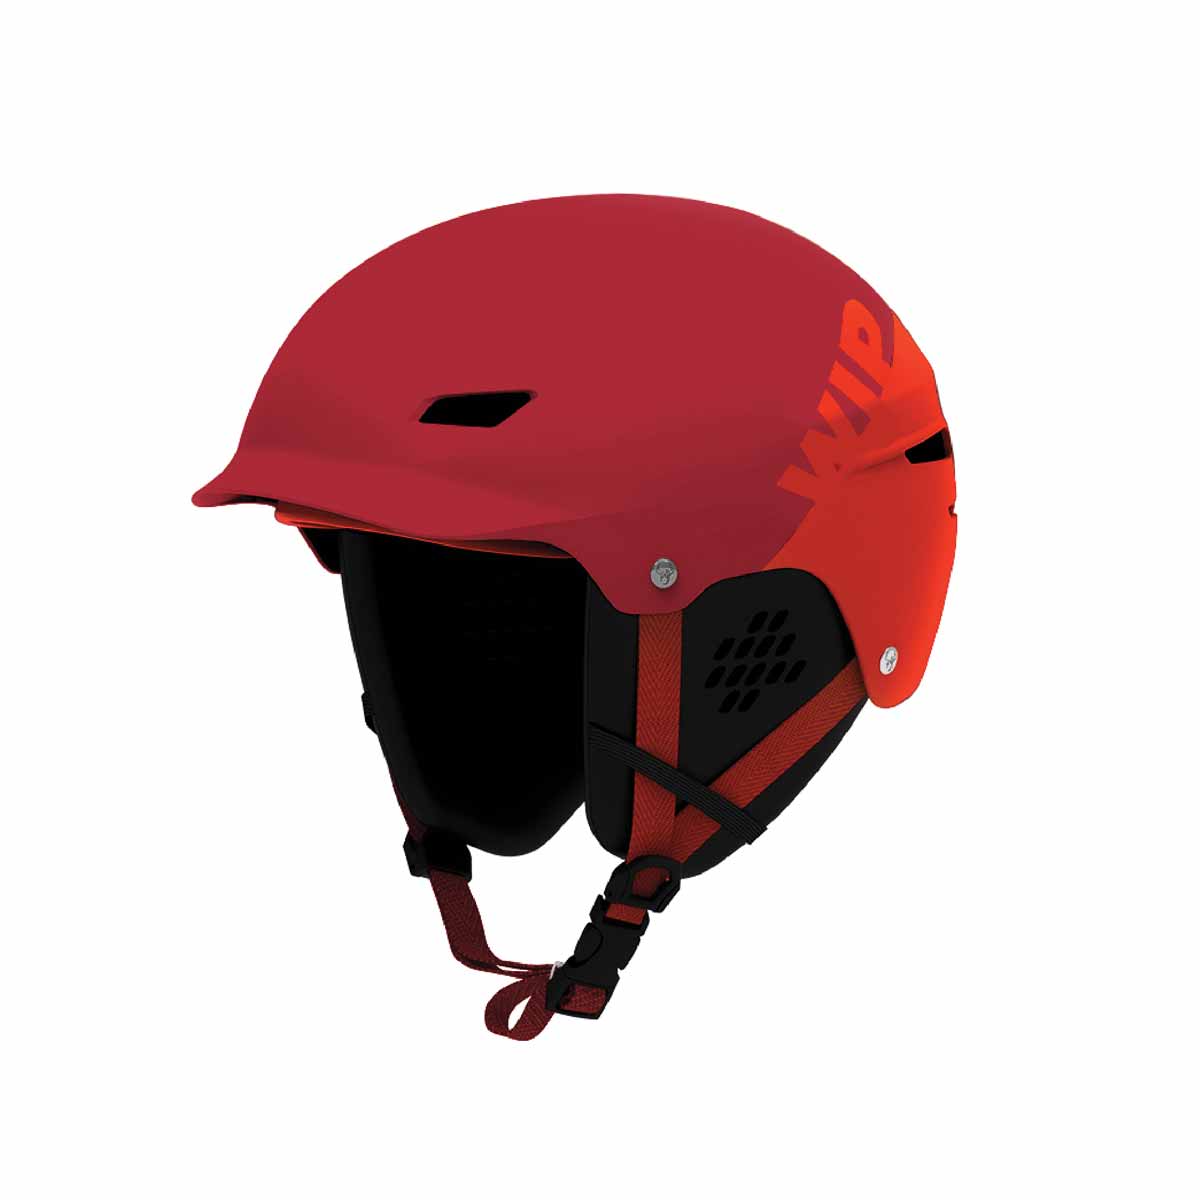 Forward-WIP Wipper 2.0 Adjustable Size Helmet – Mat Red